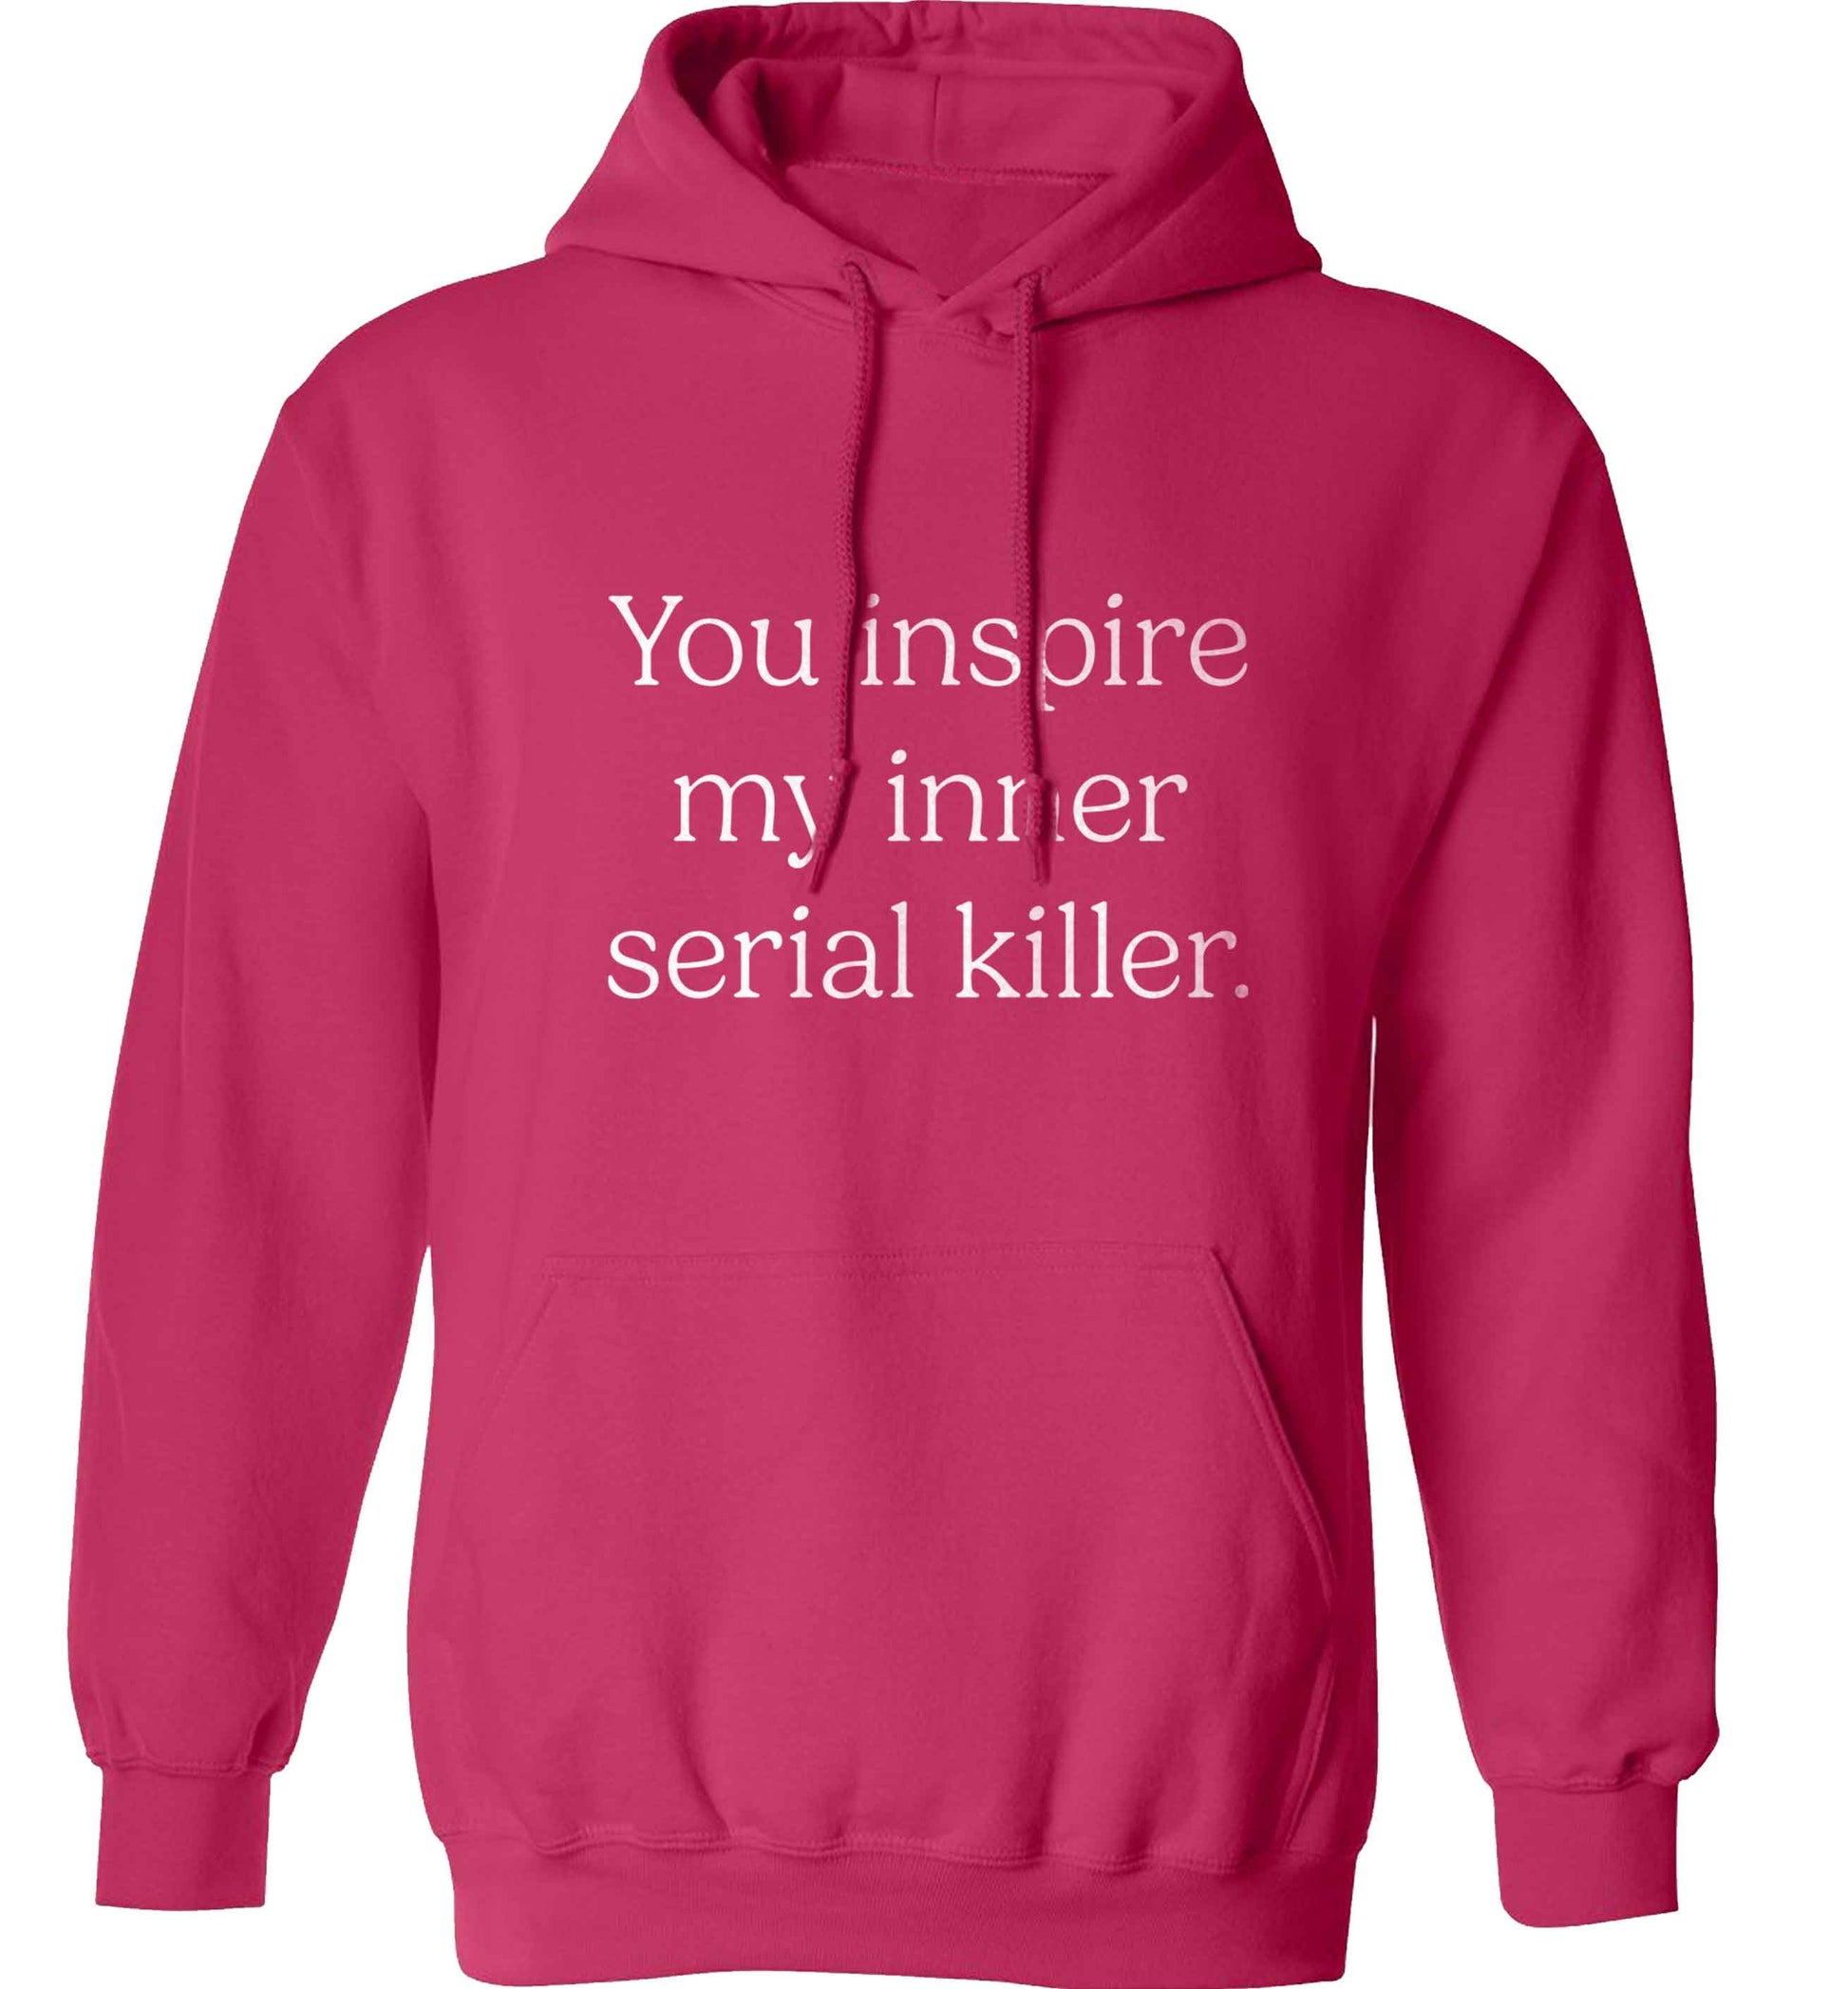 You inspire my inner serial killer Kit adults unisex pink hoodie 2XL